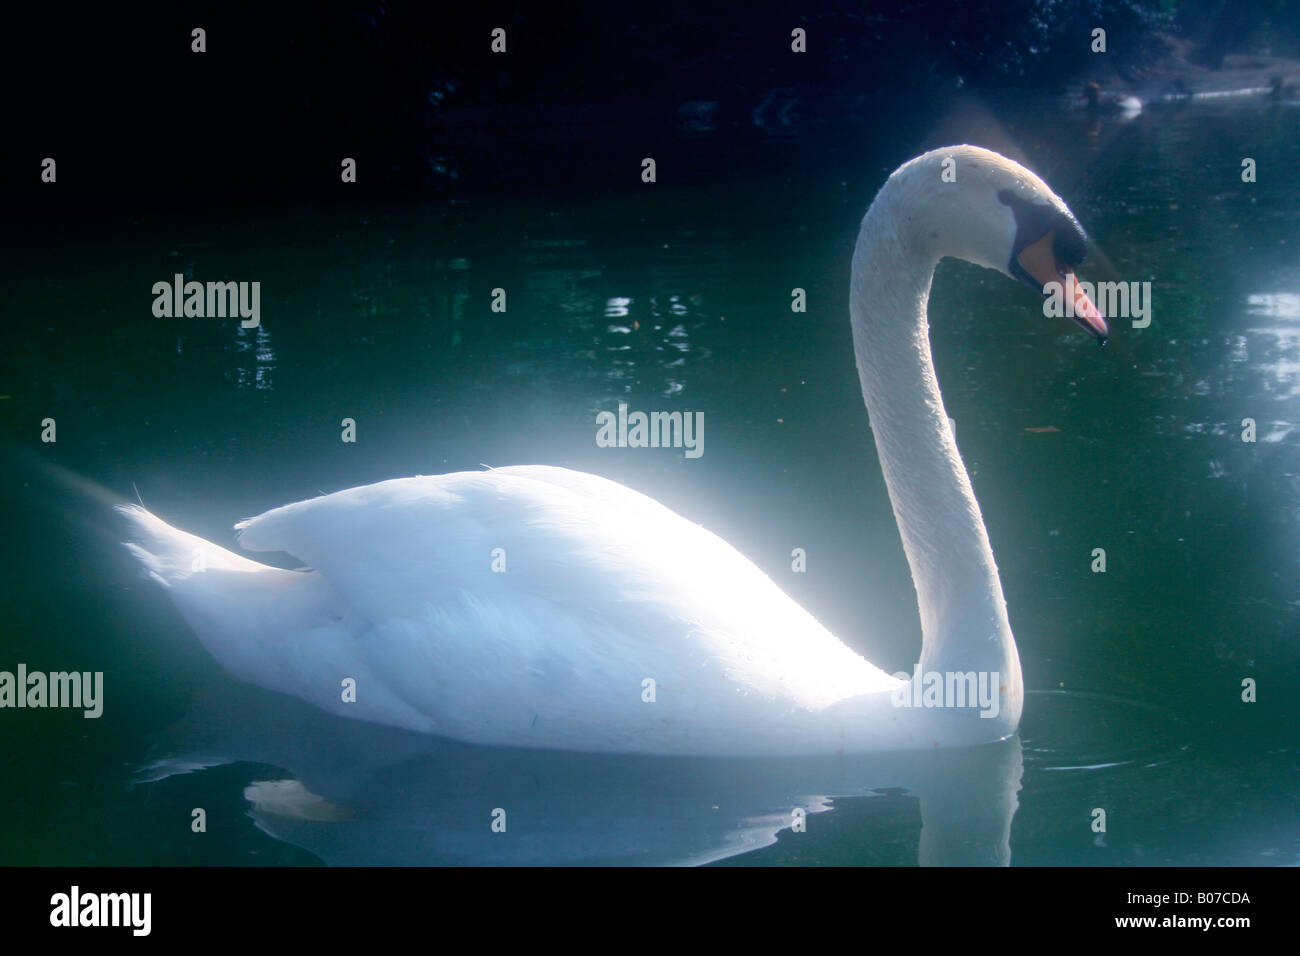 swan Cygnus olor Stock Photo